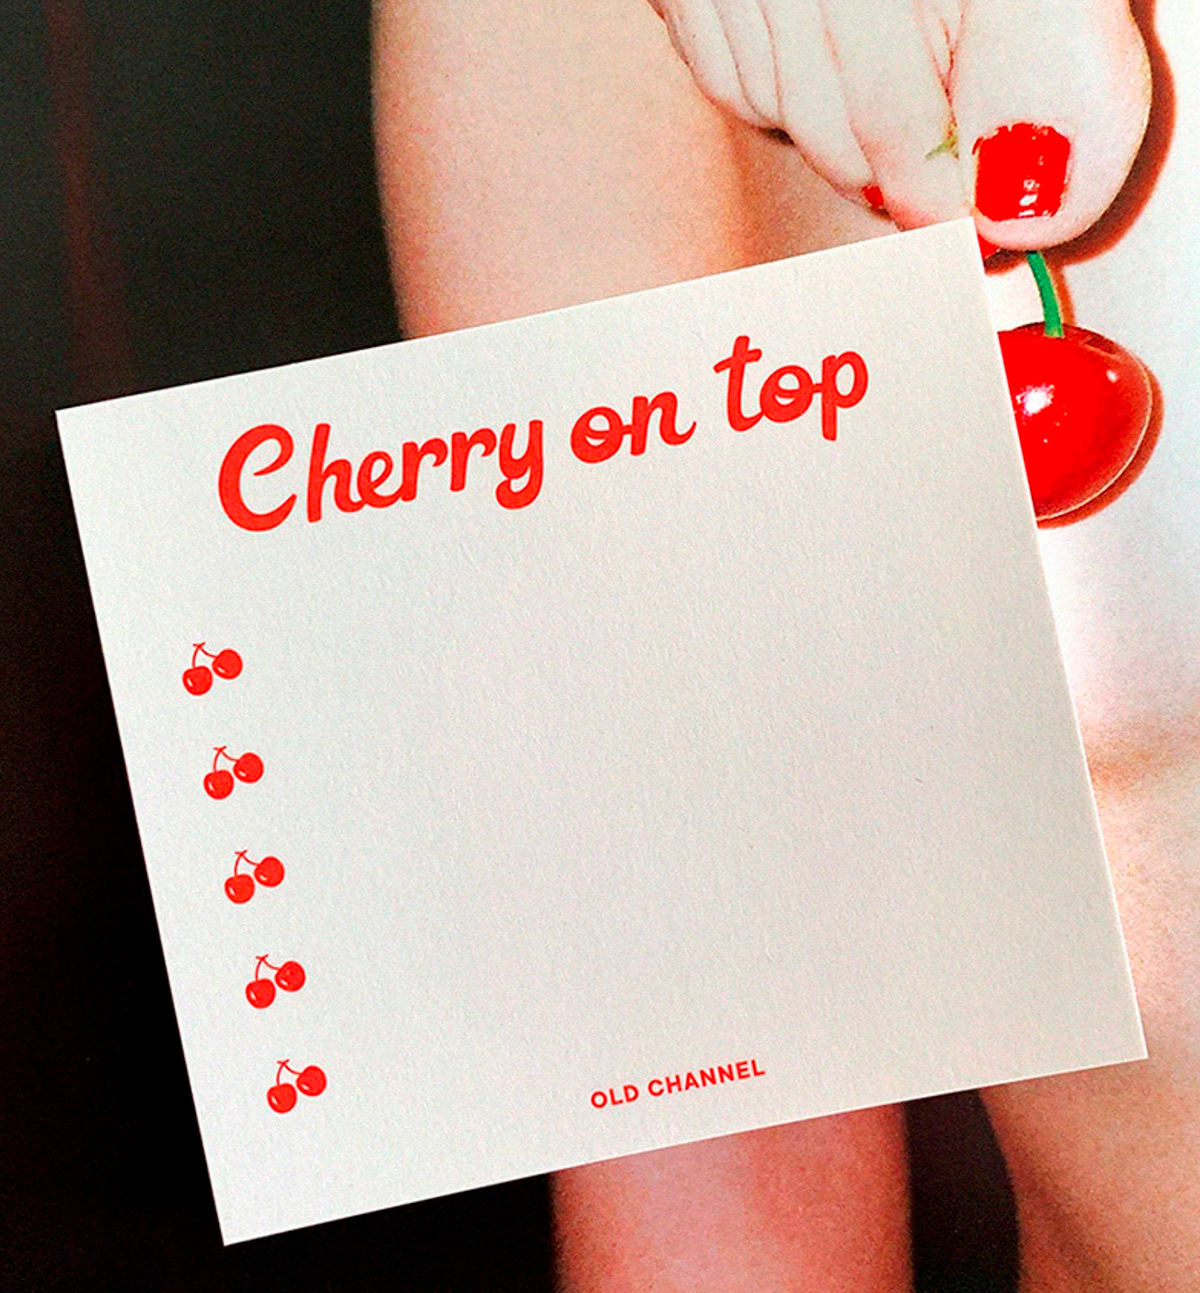 Cherry On Top Memopad